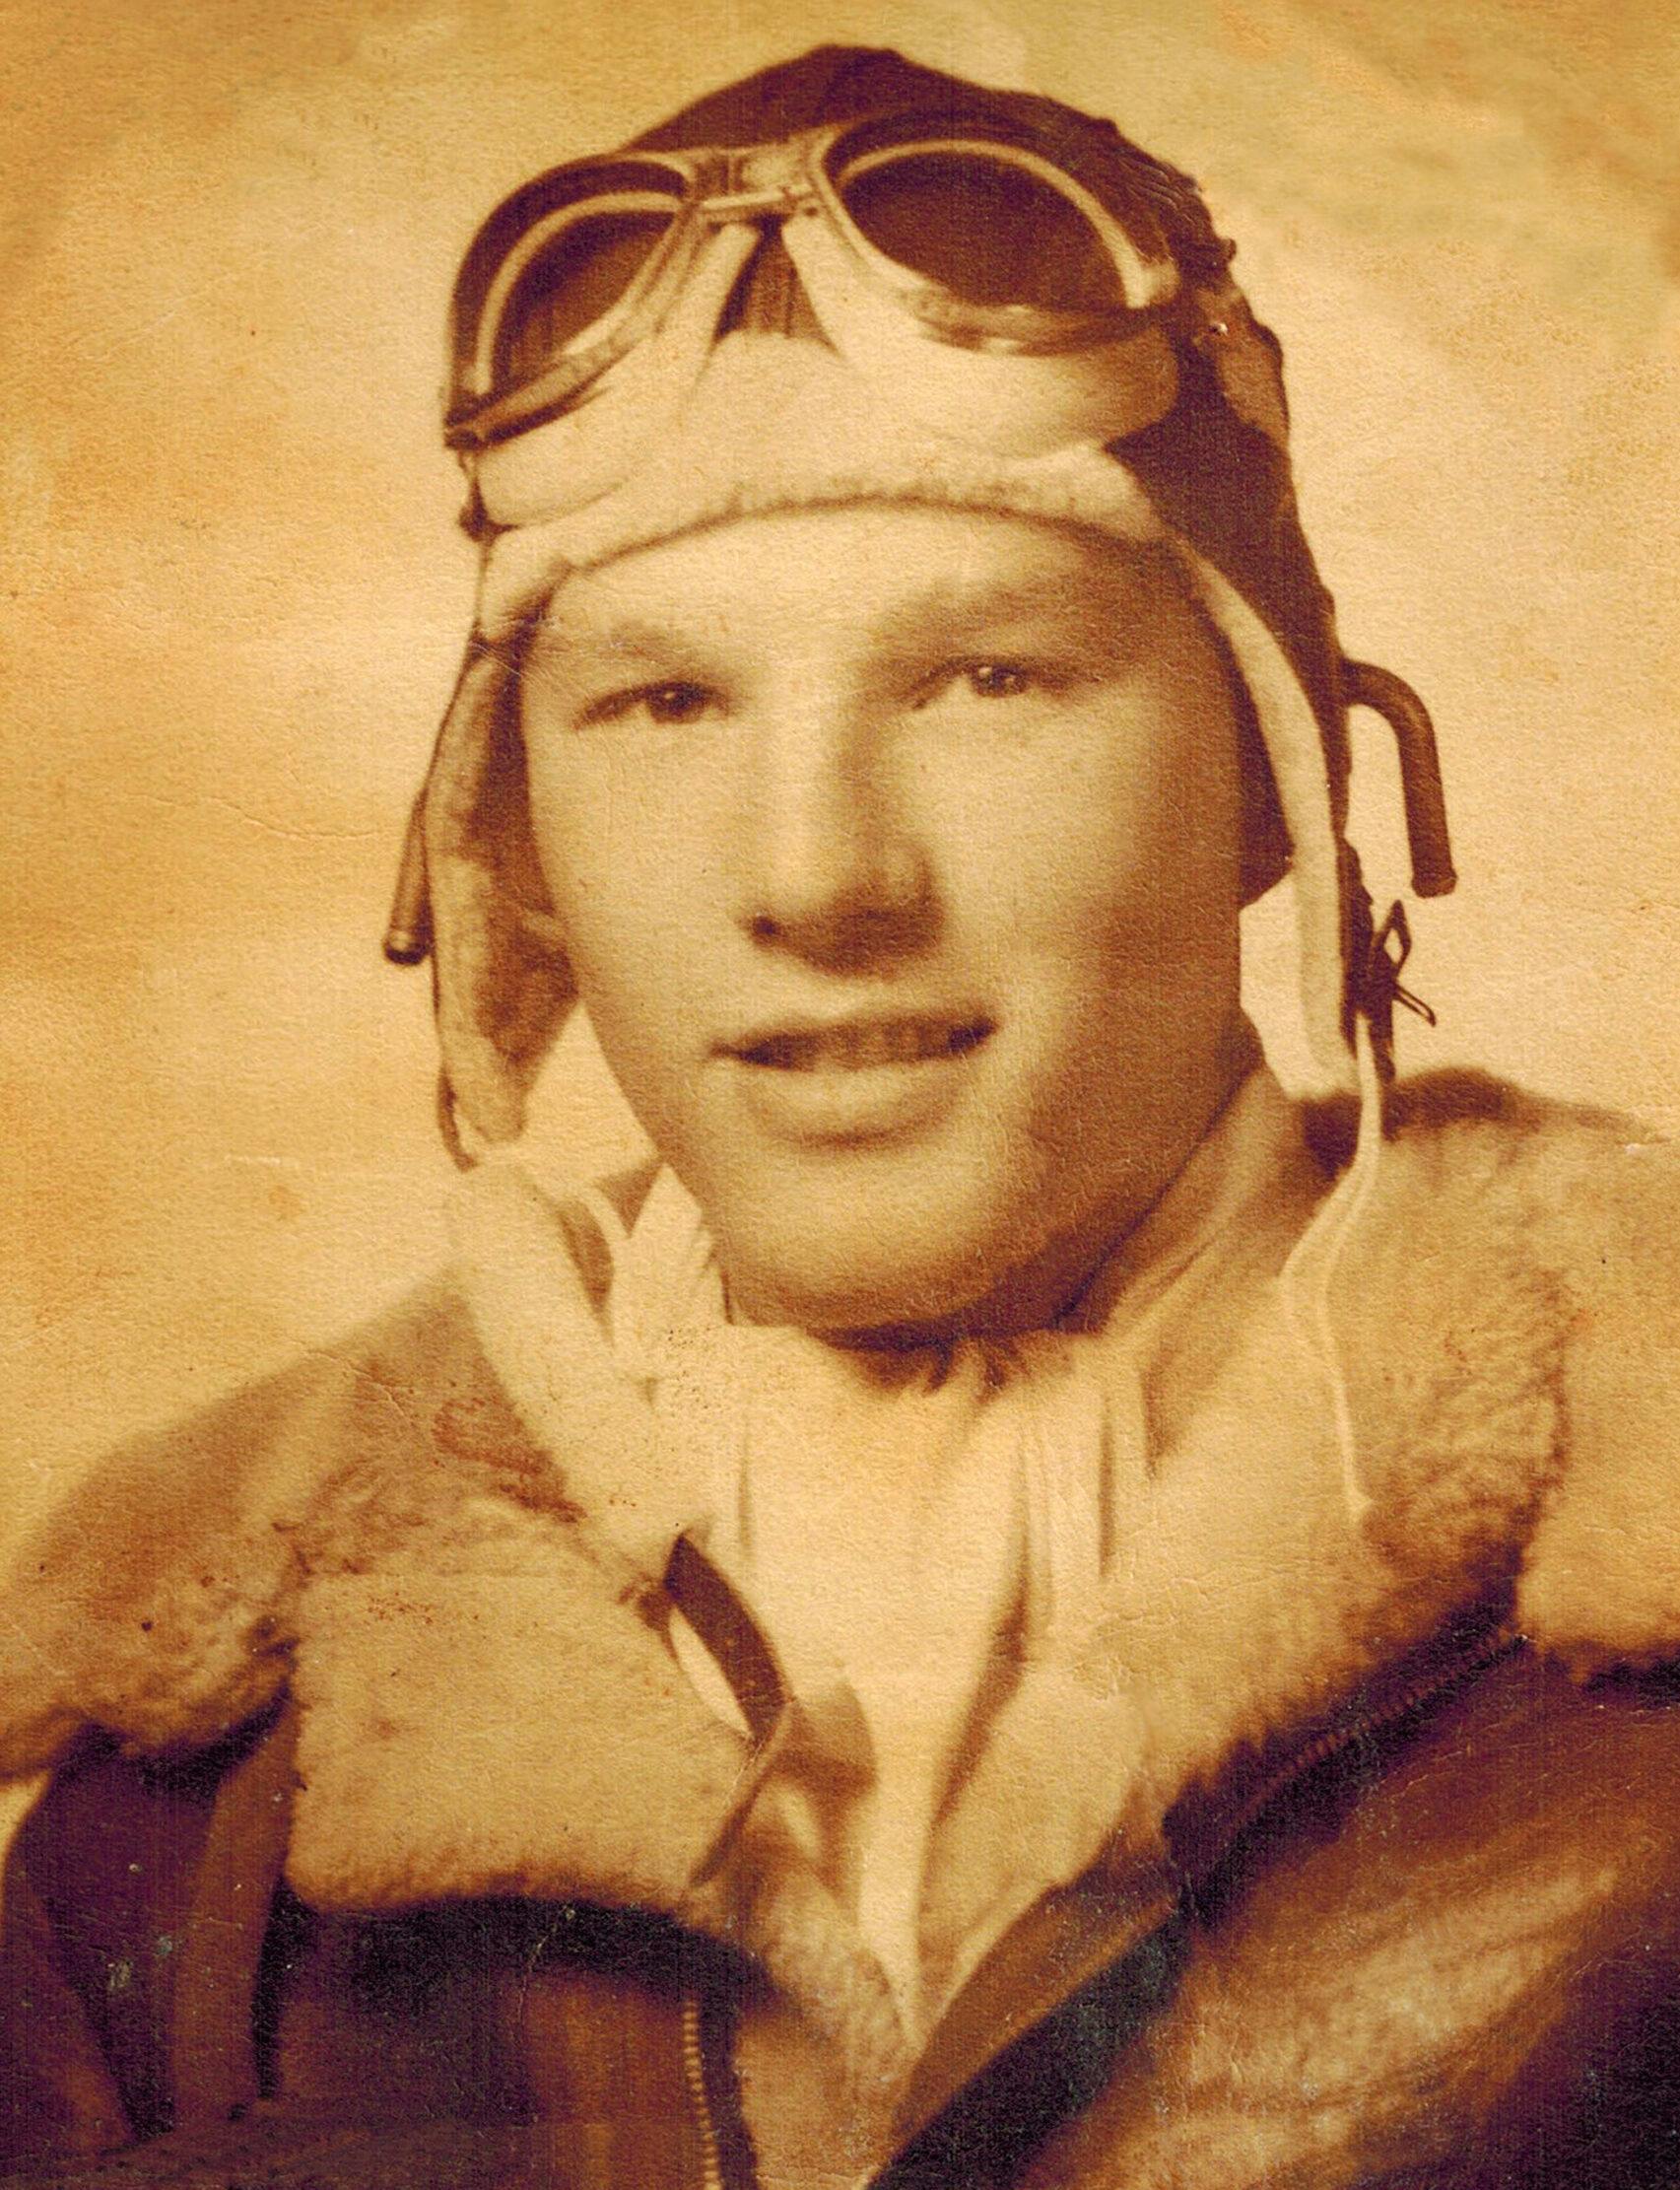 Bob Taylor 1943 age 19